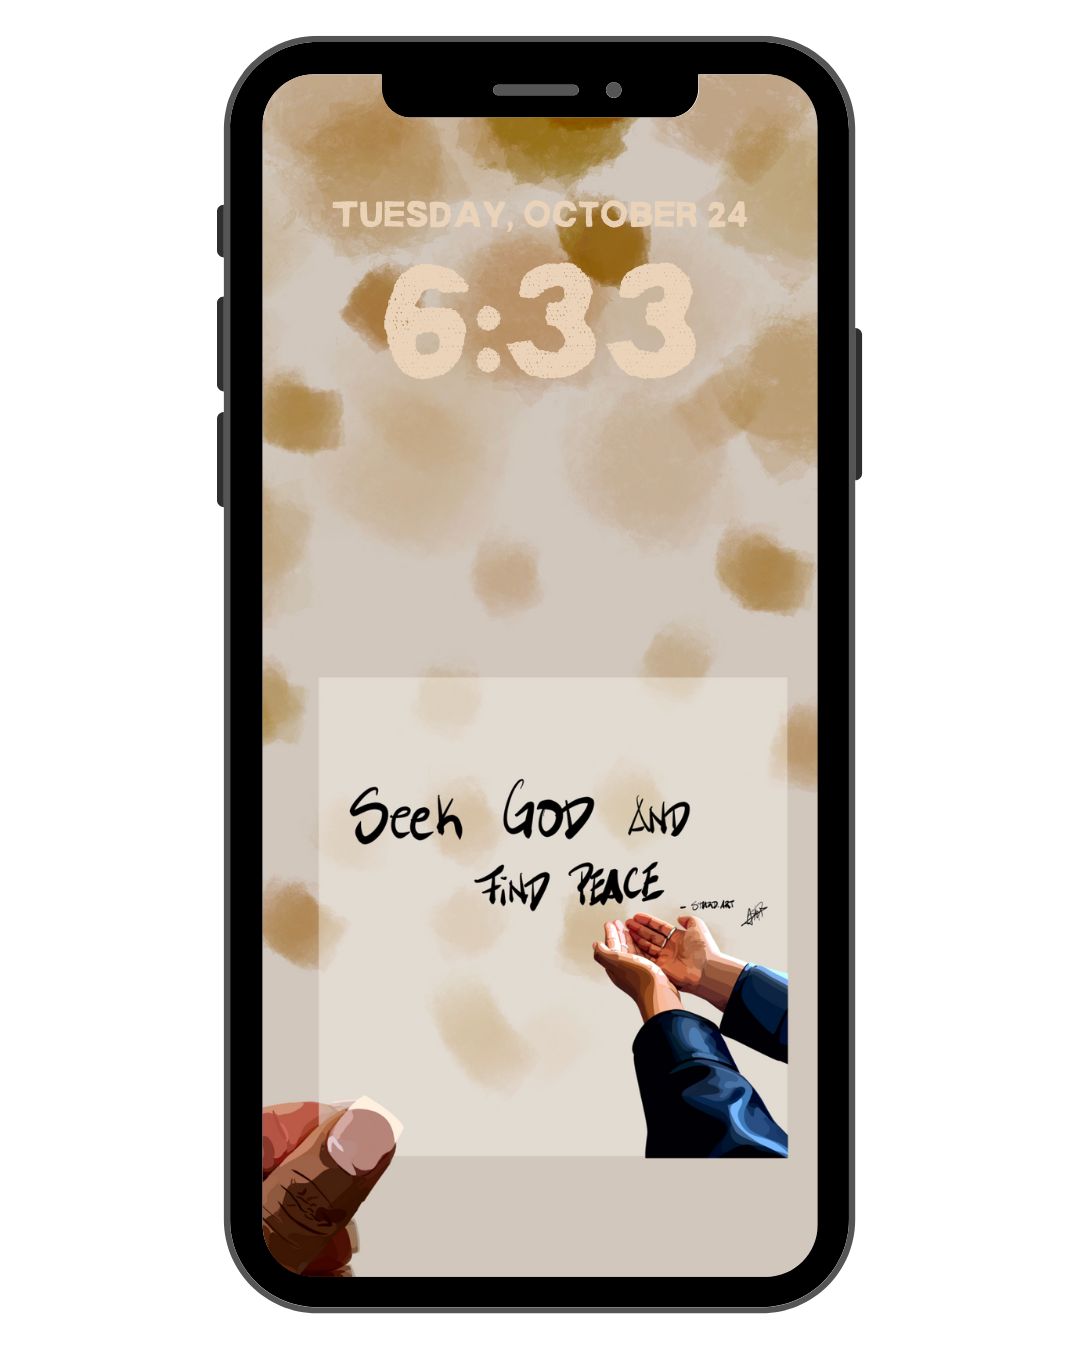 Seek God - Phone Screensaver